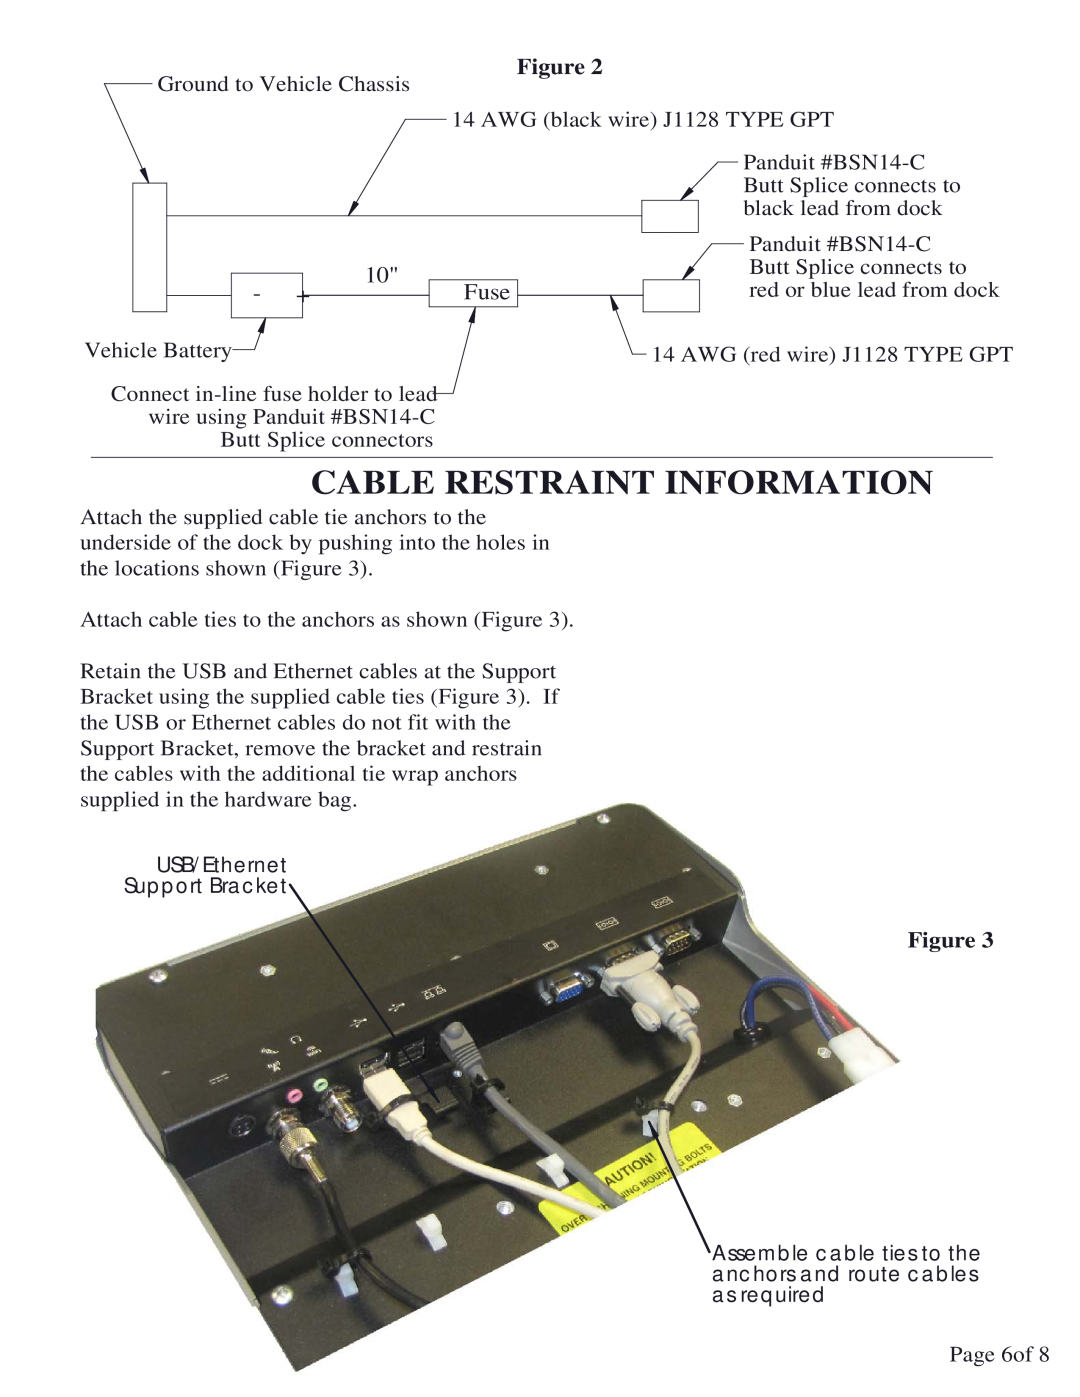 Gamber Johnson 7160-0526-02, 7160-0526-00 installation instructions Cable Restraint Information 